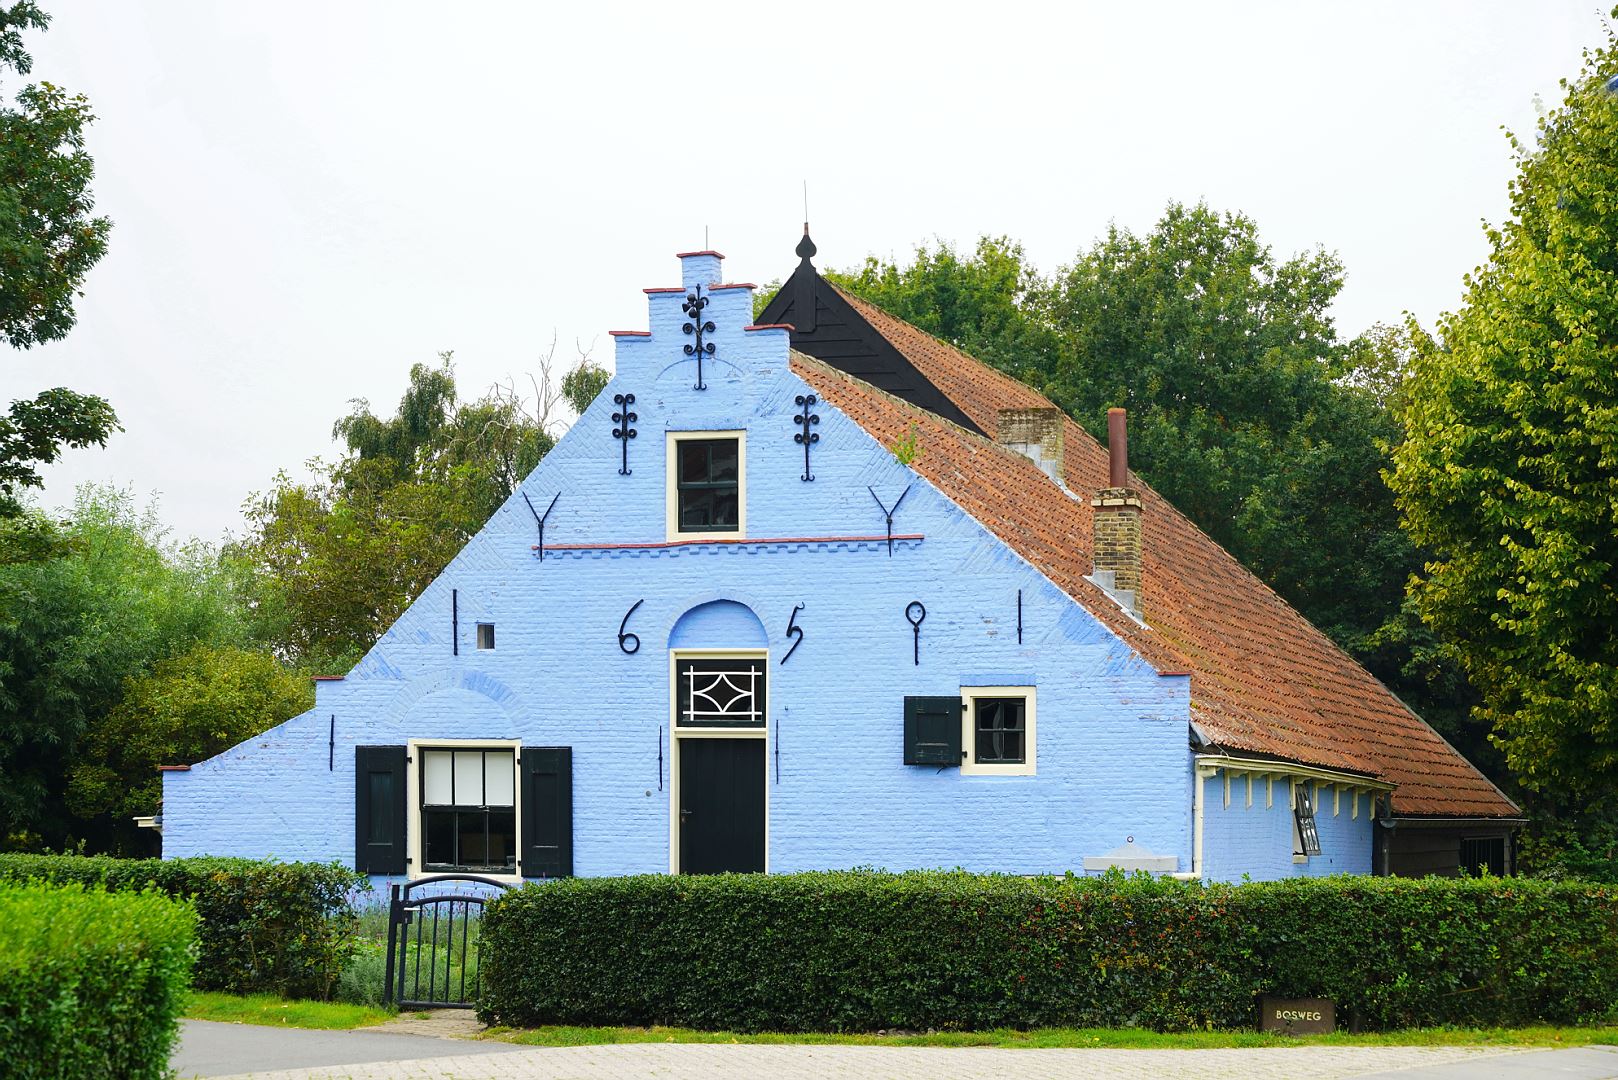 Blauw huis Ouddorp